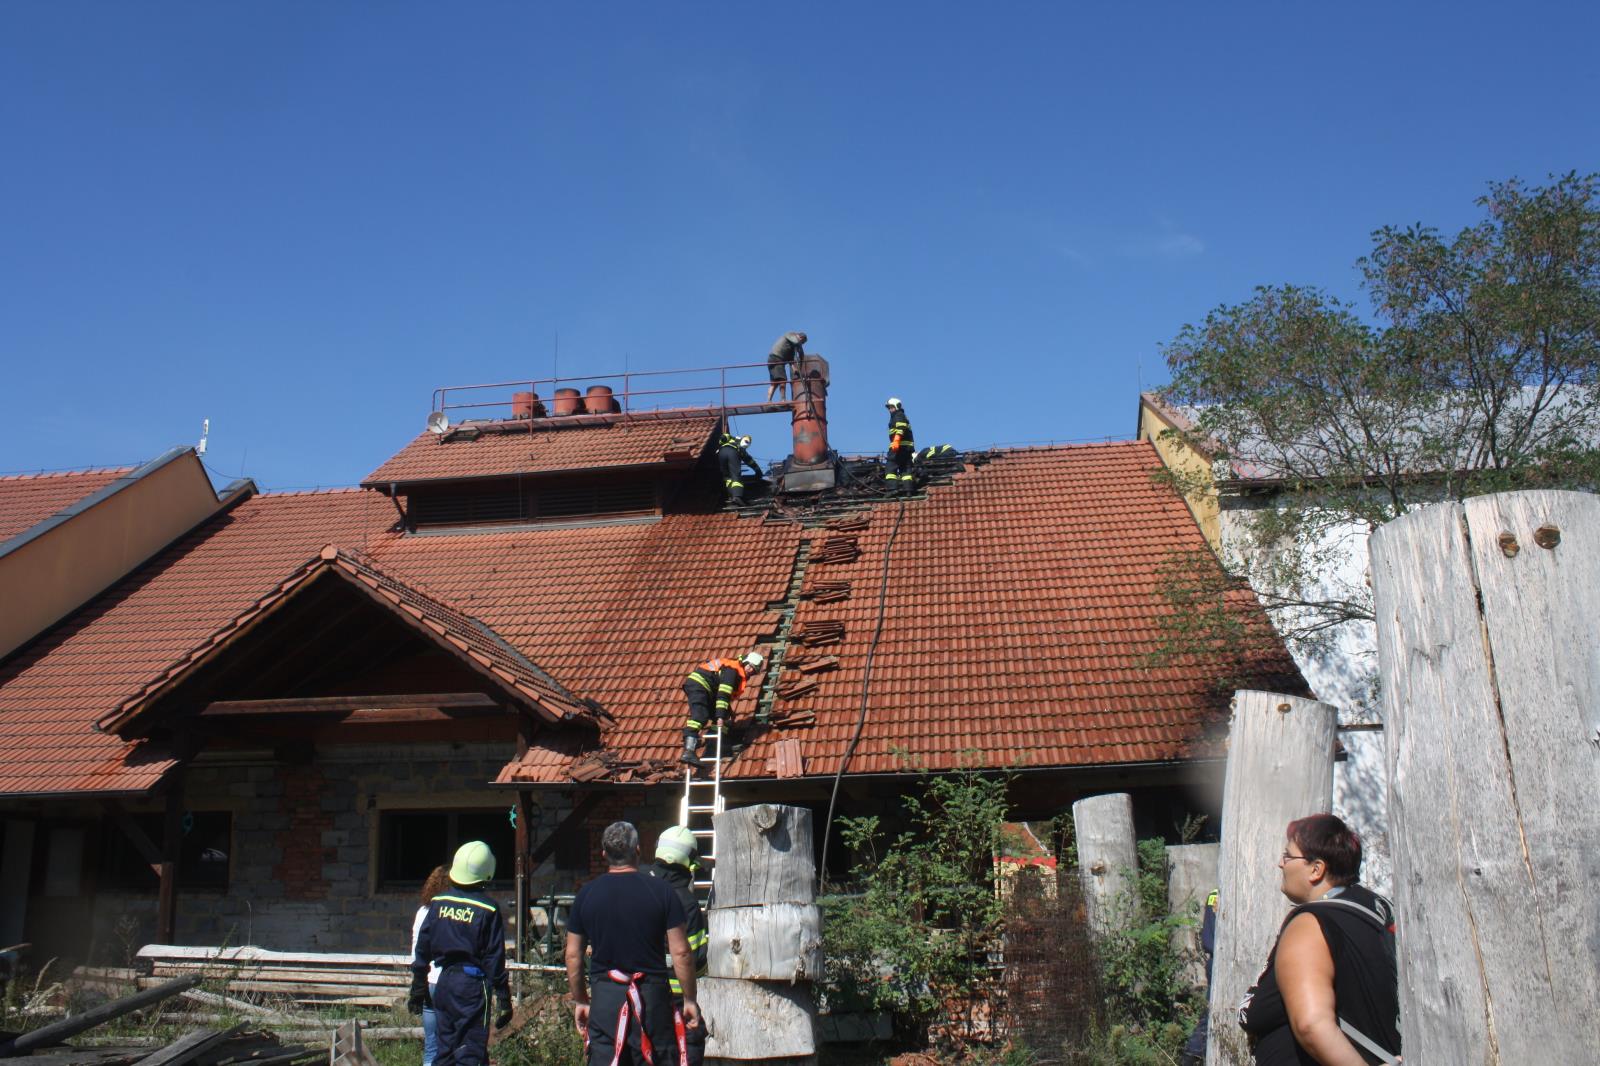 Požár střechy, Holašovice - 10. 9. 2018 (2).JPG